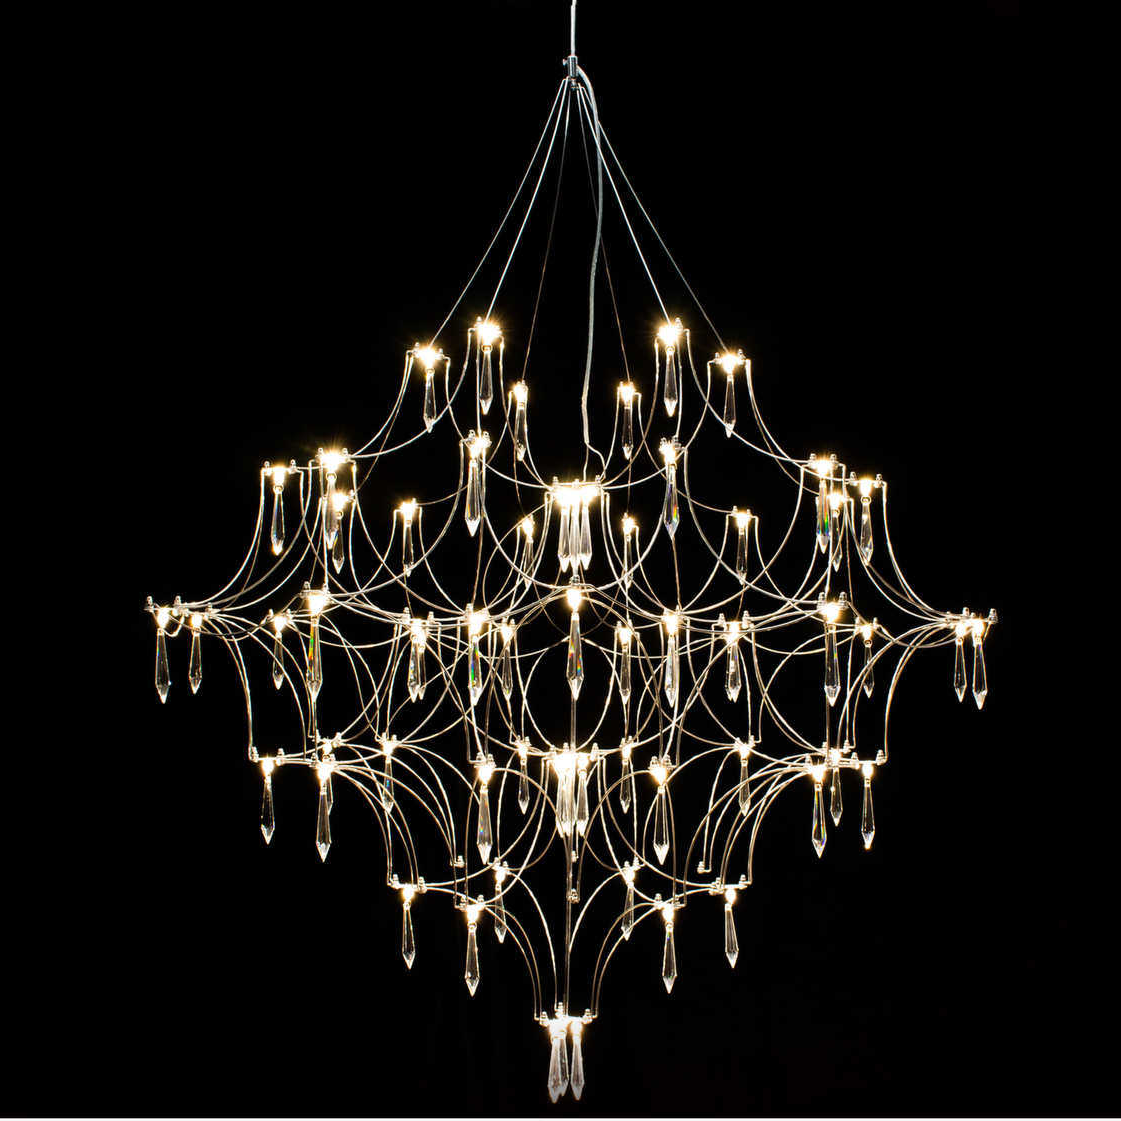 Star Rain Little Man Waist (Wave) Edition Crystal chandelier